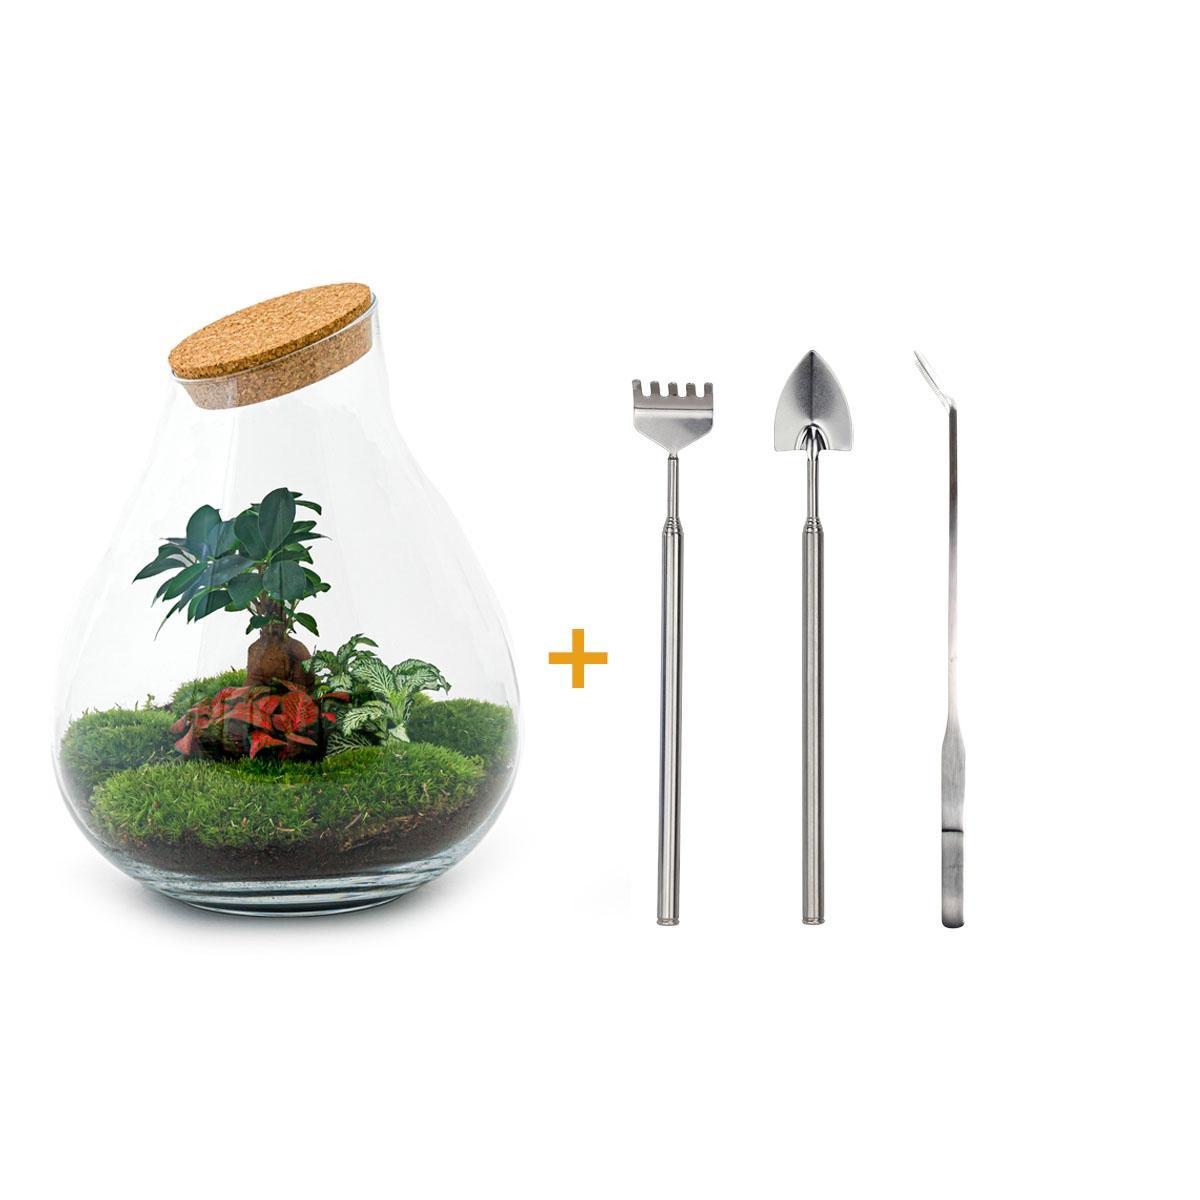 DIY terrarium - Drop XL Bonsai - ↑ 37 cm + Rake + Shovel + Tweezer